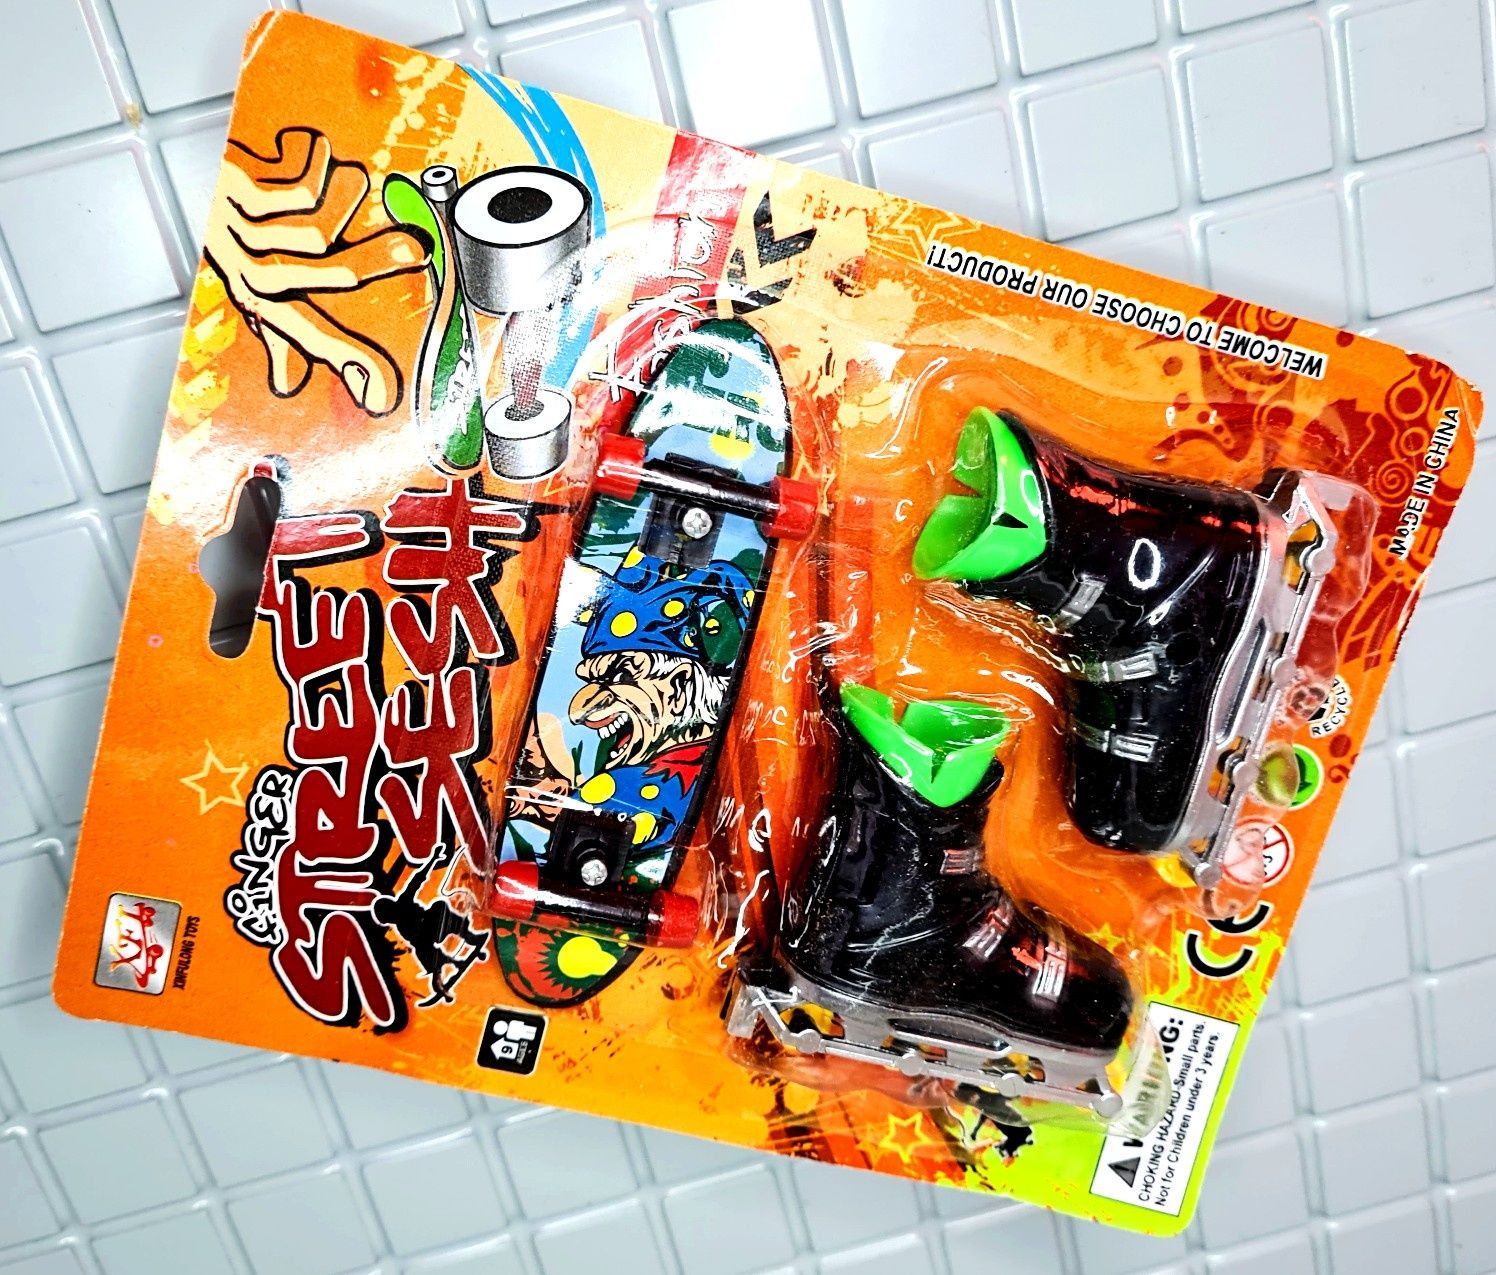 Nowy zestaw FingerBoard rolki super zabawa - zabawki